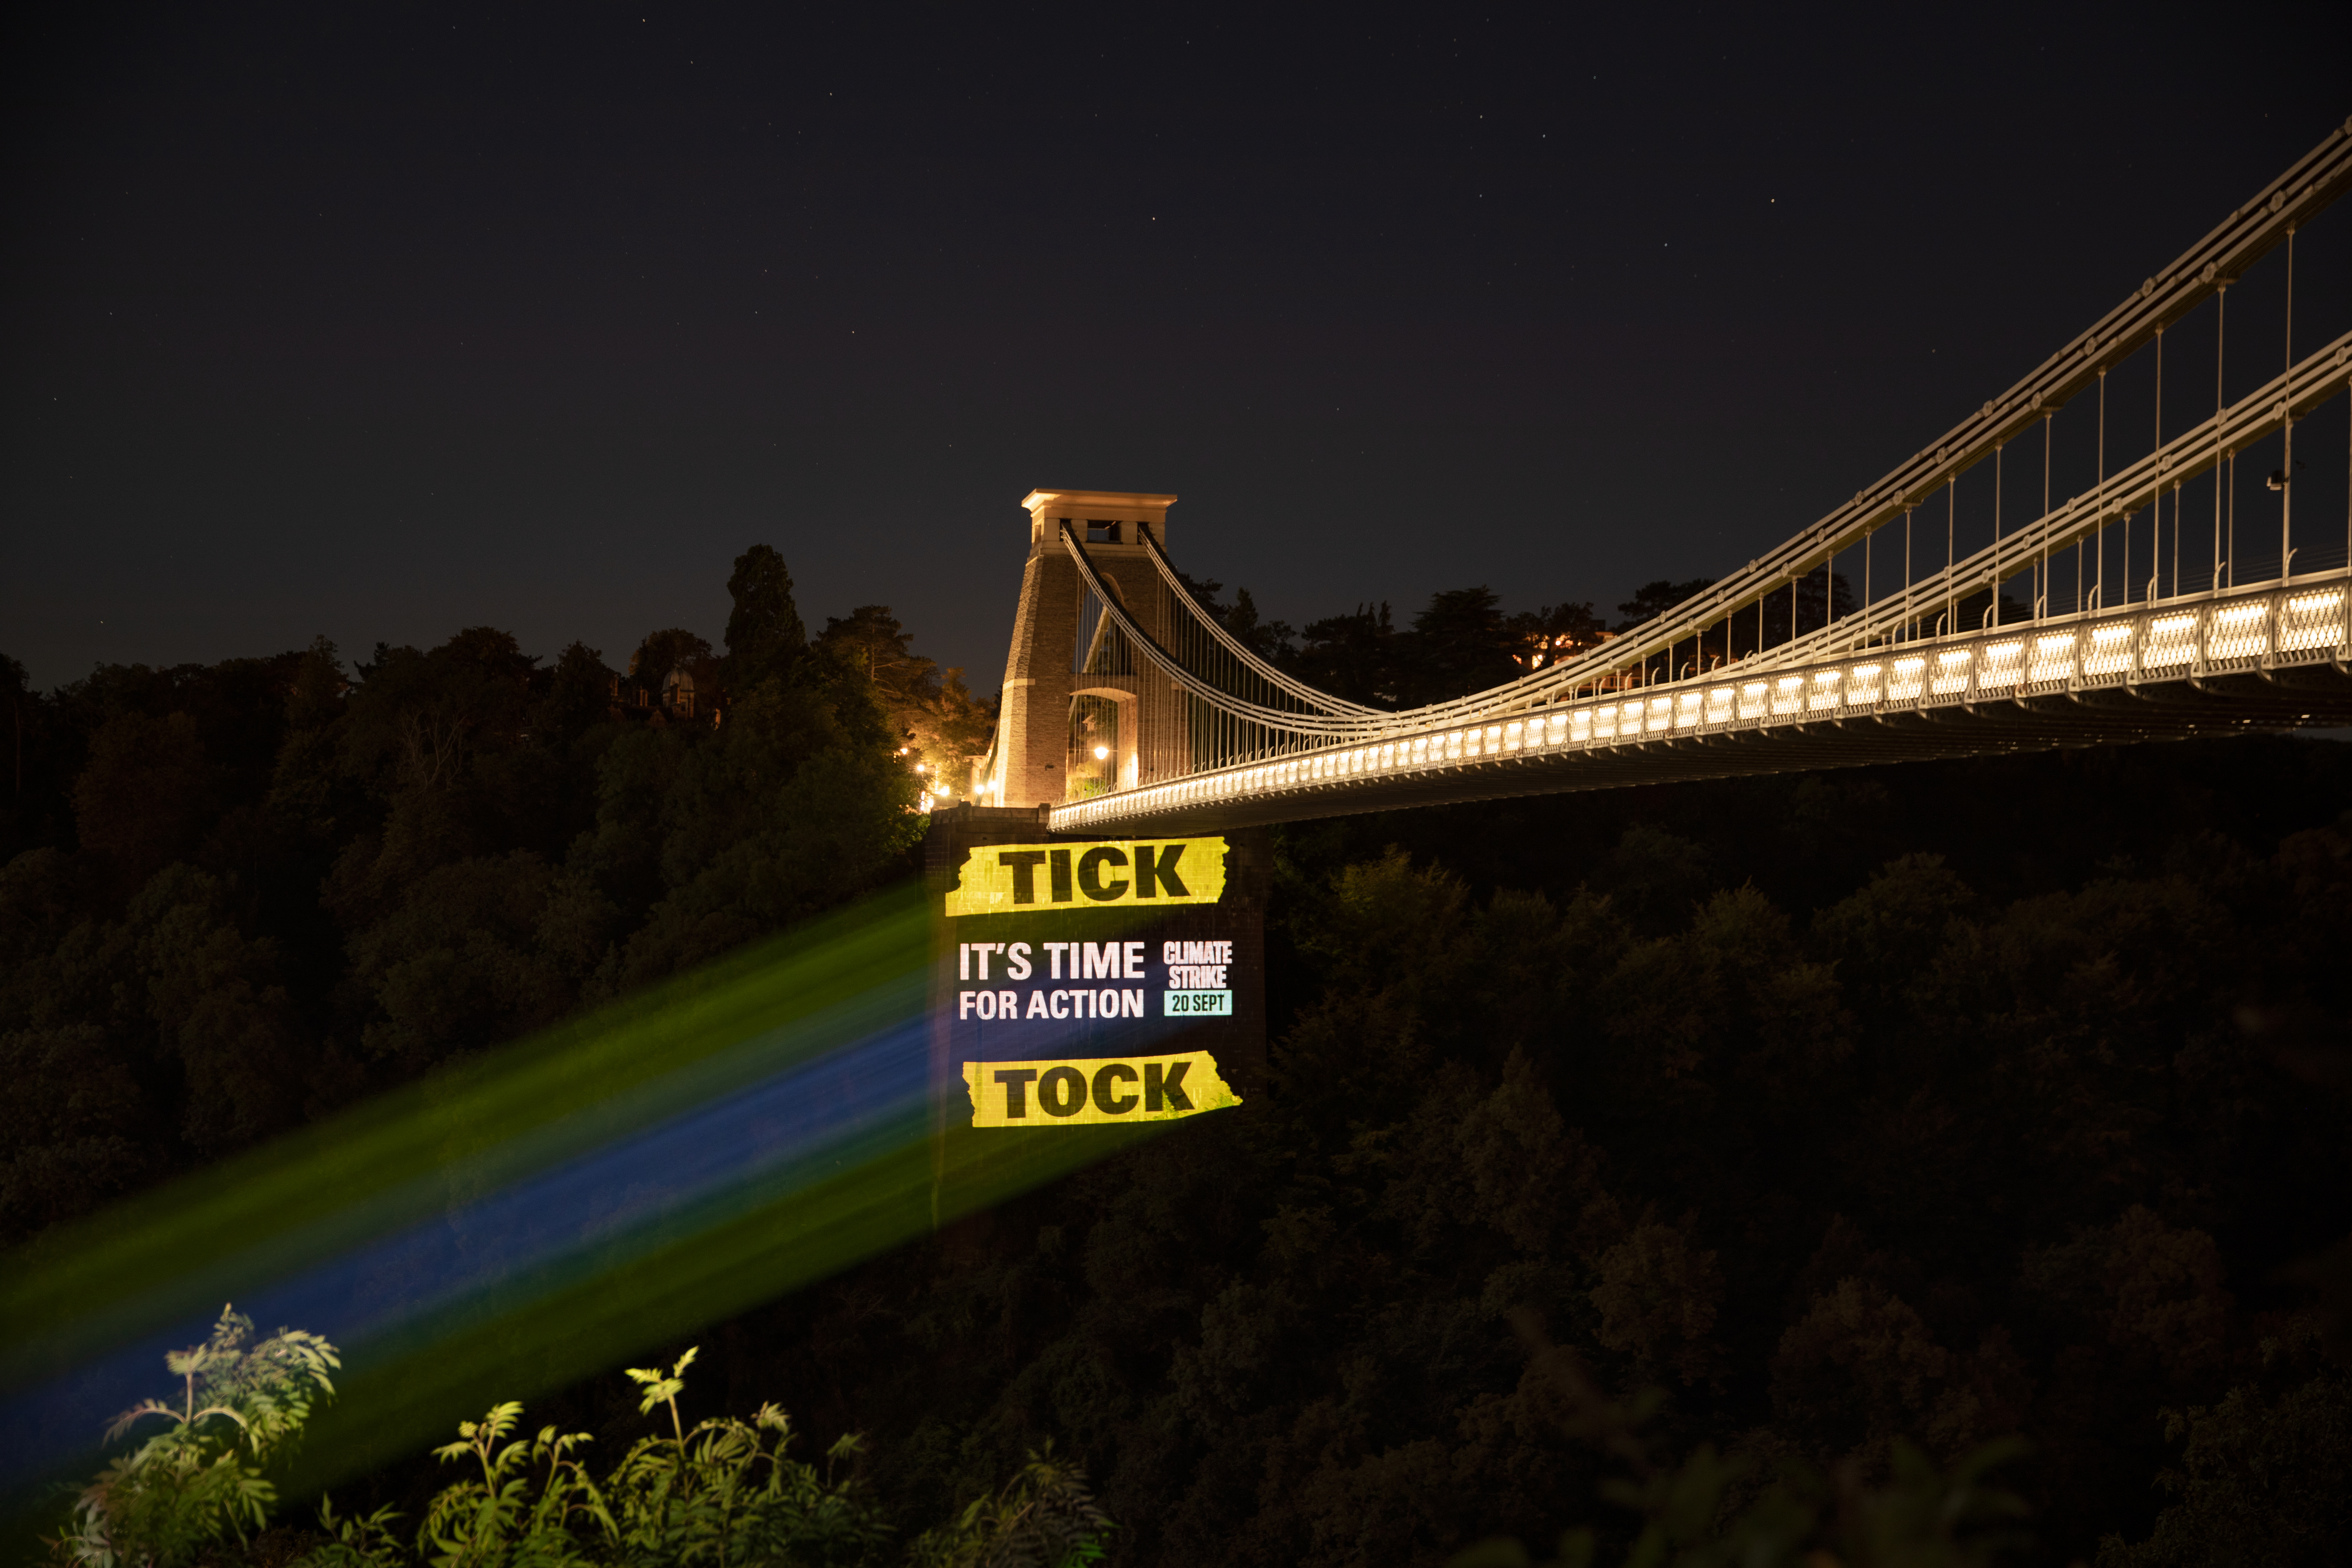 Clifton Suspension Bridge was lit up to promote the strikes on Friday (Ben Allen)